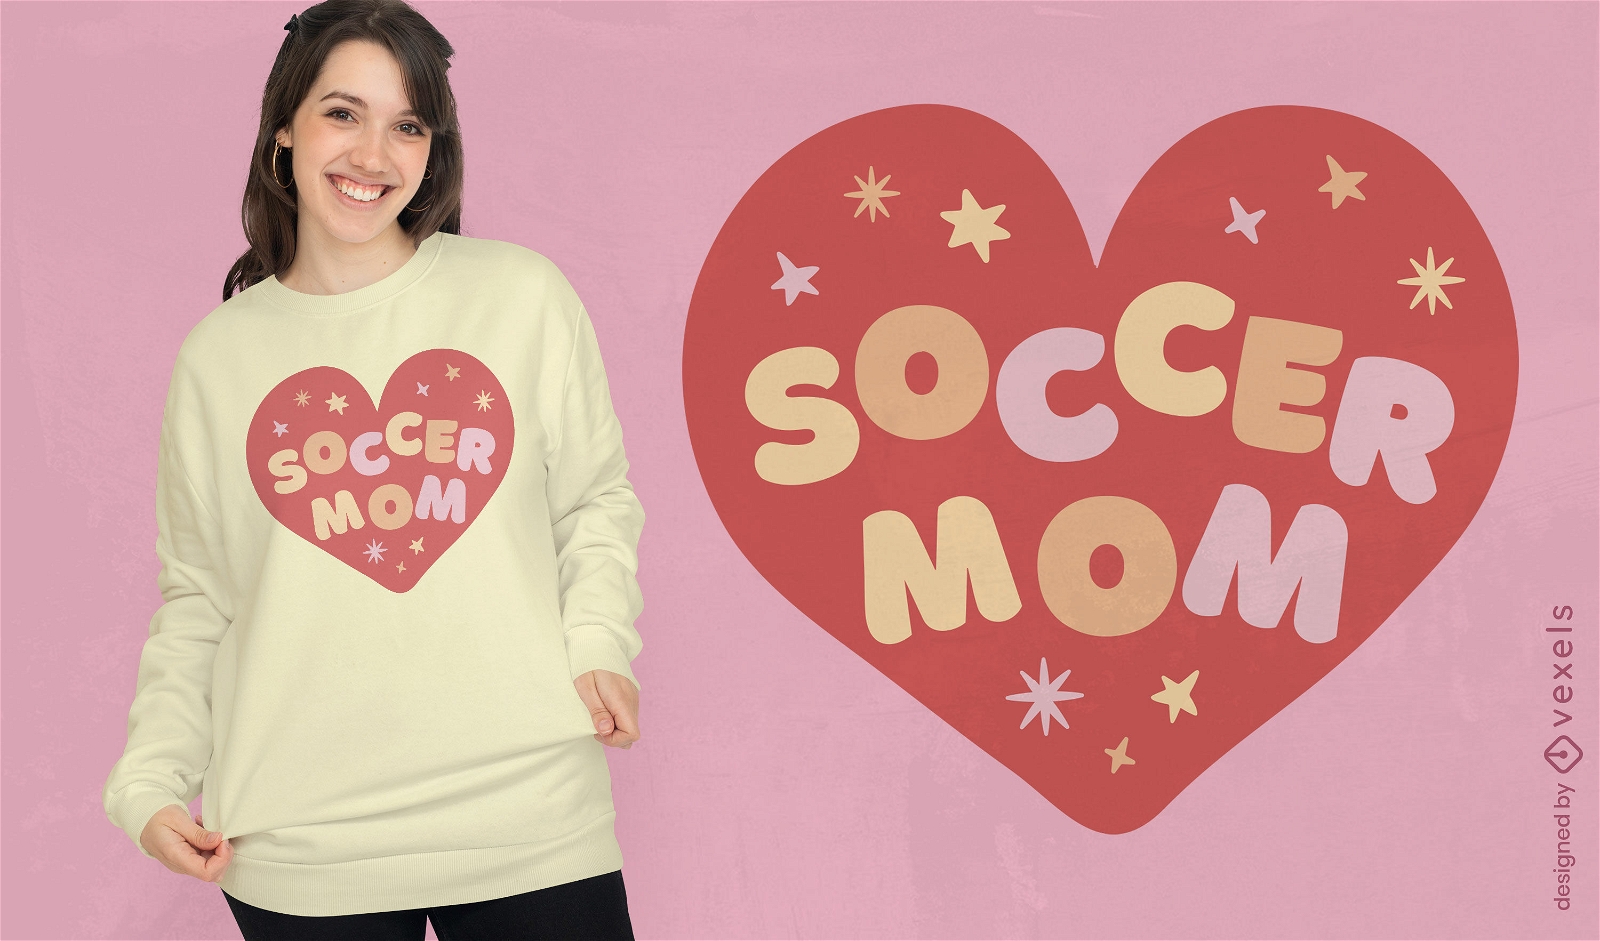 Heart soccer mom cute t-shirt design